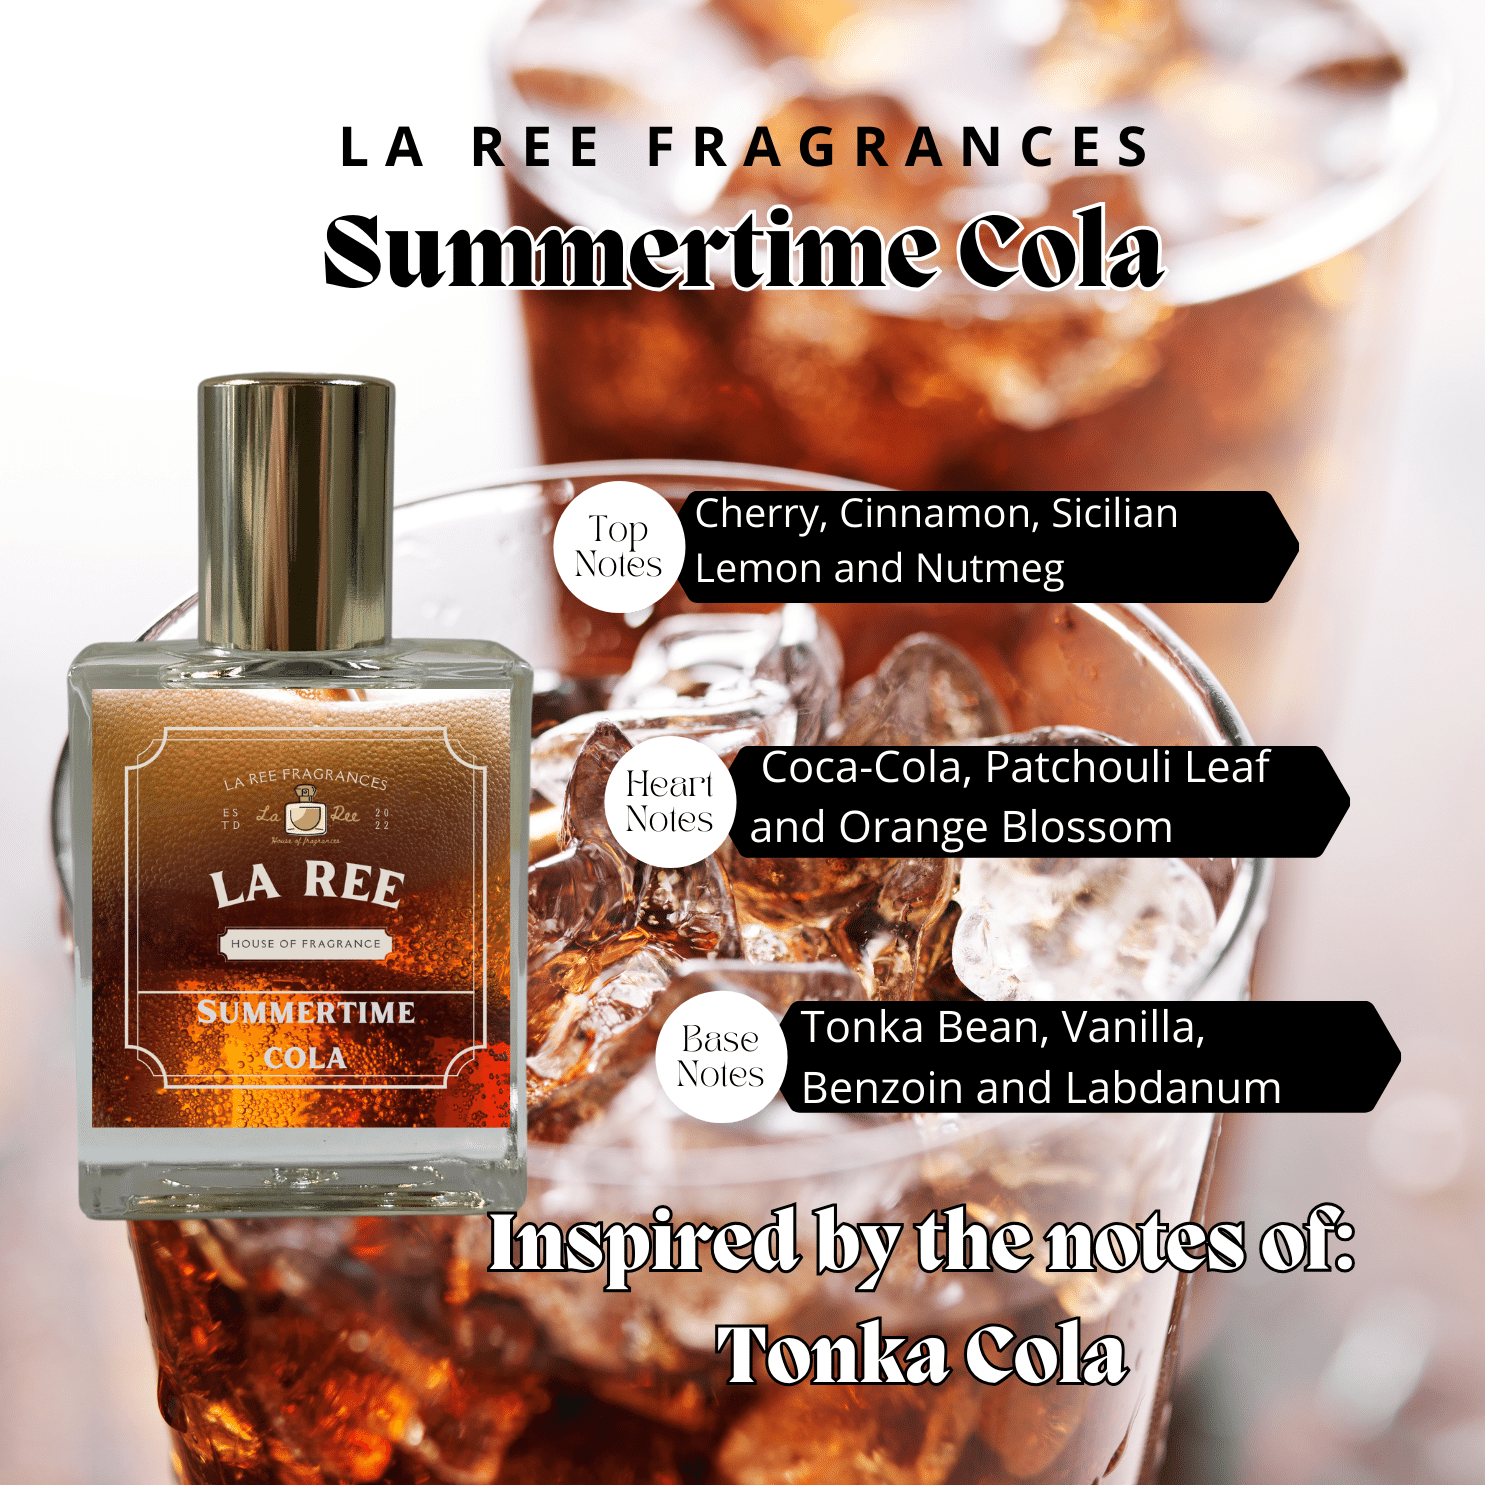 La Ree Summertime Cola inspired by Mancera® Tonka Cola